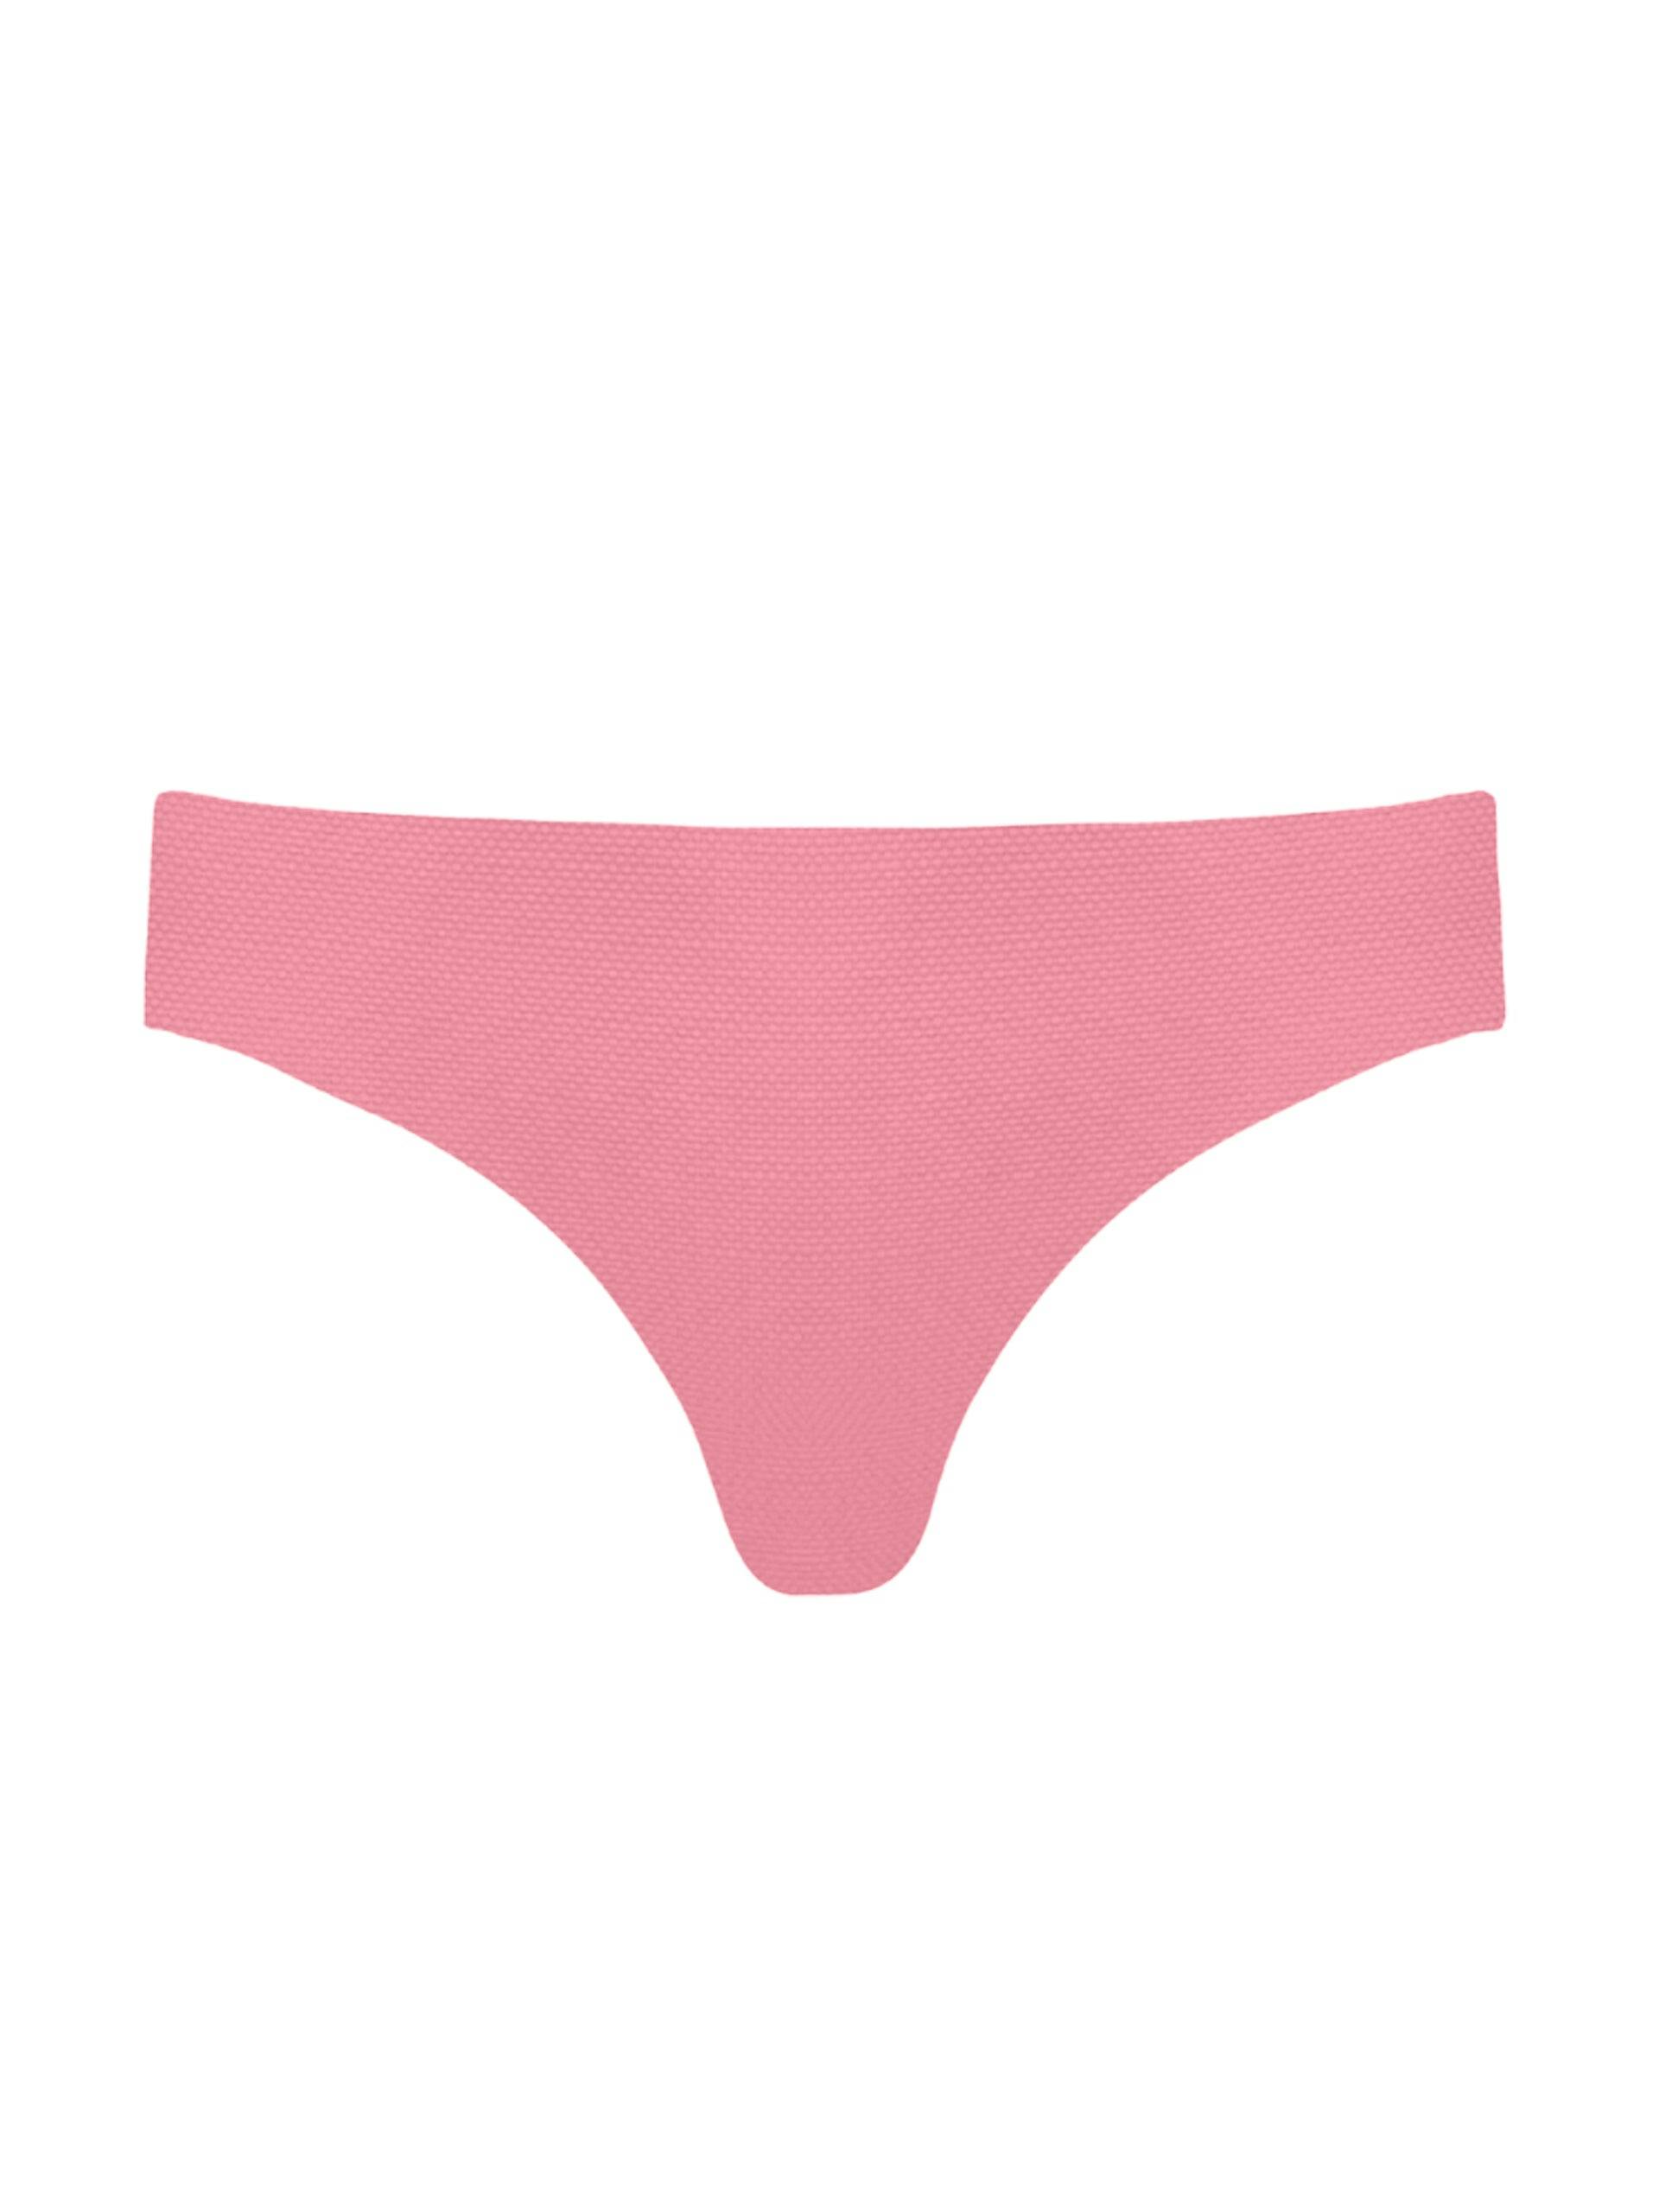 Pink Elle hipster bikini bottom